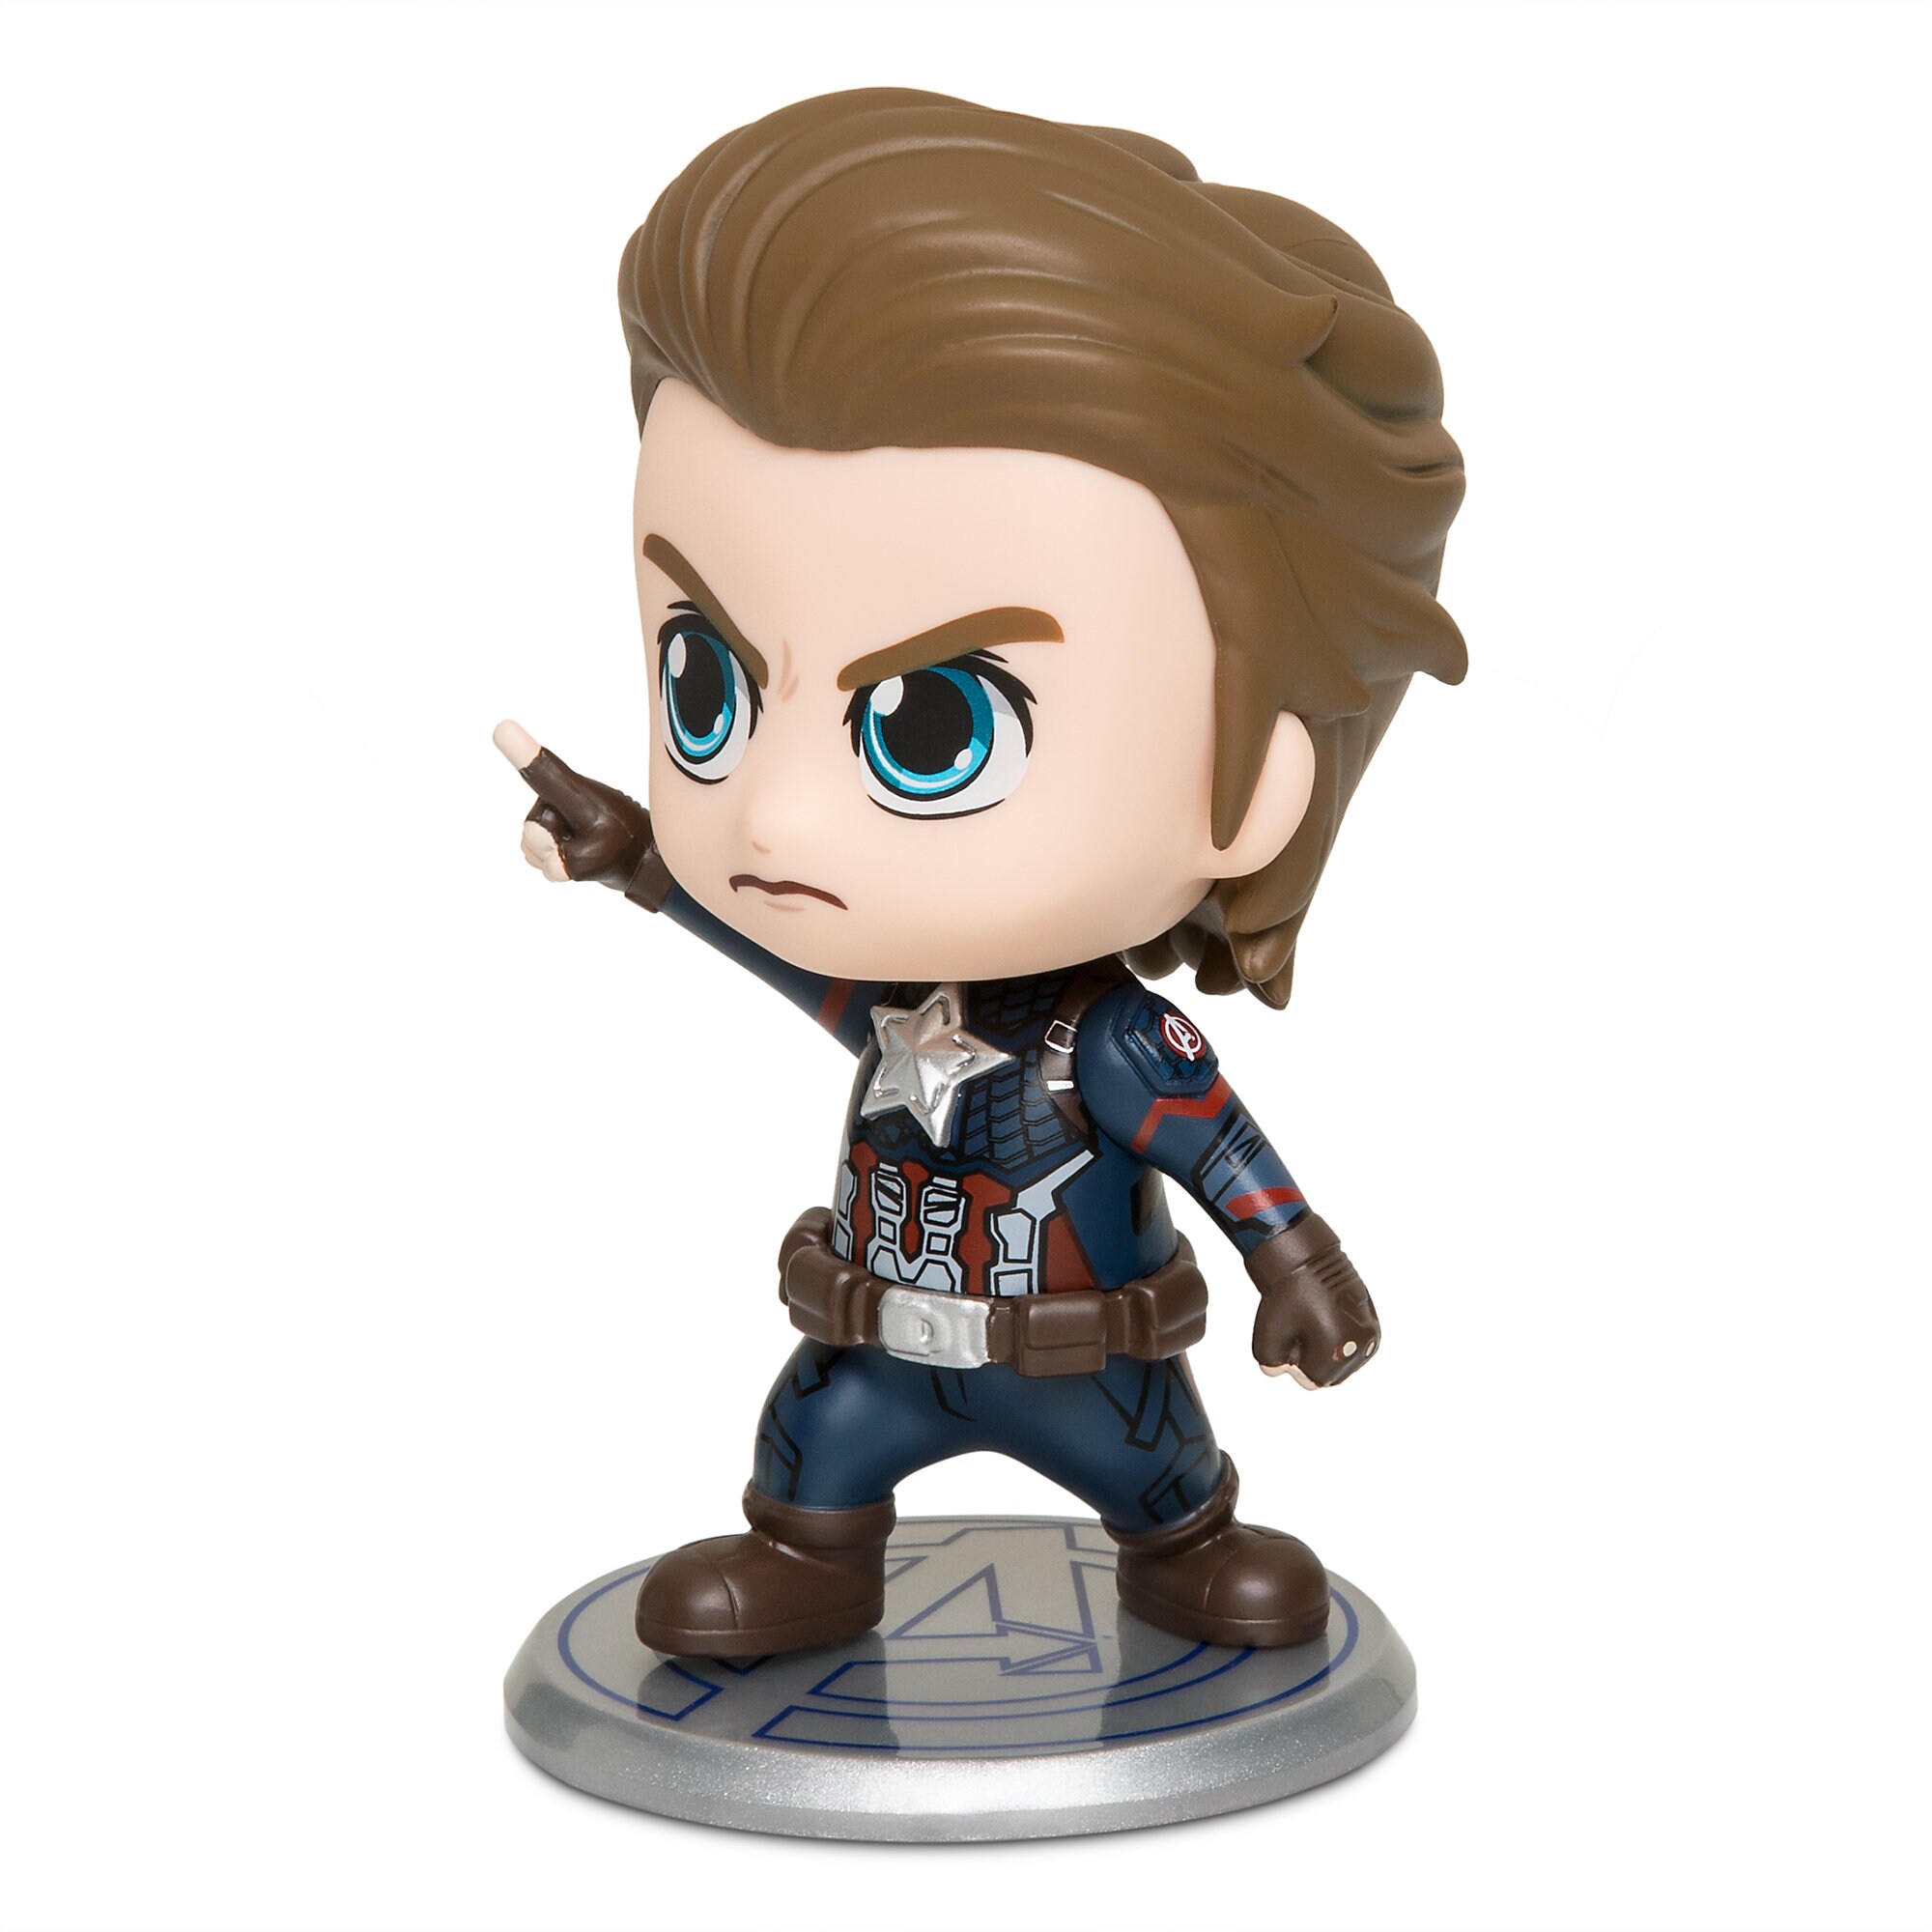 Captain America Cosbaby Bobble-Head Figure by Hot Toys - Marvel's Avengers: Endgame